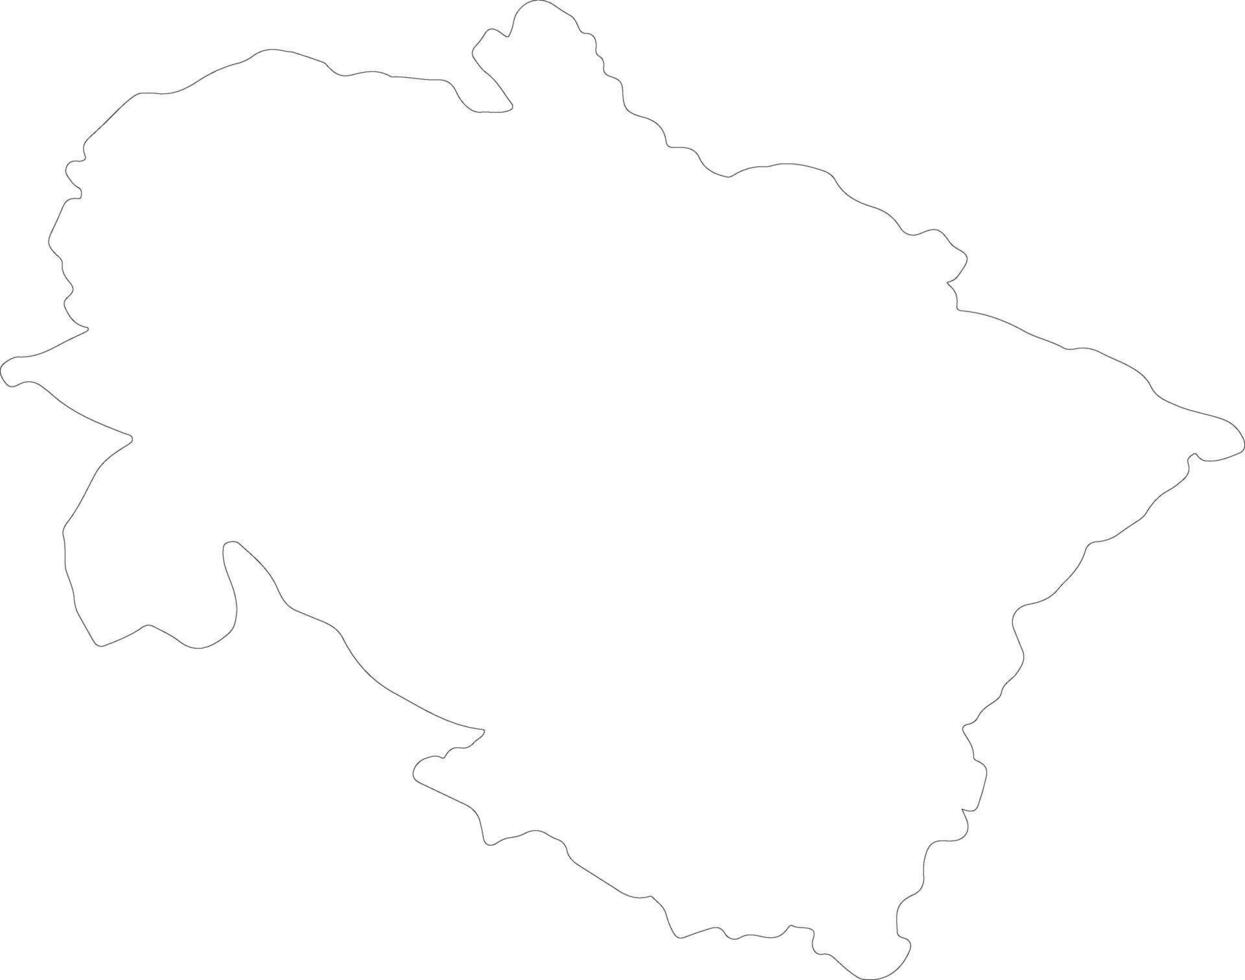 utaranchal Índia esboço mapa vetor